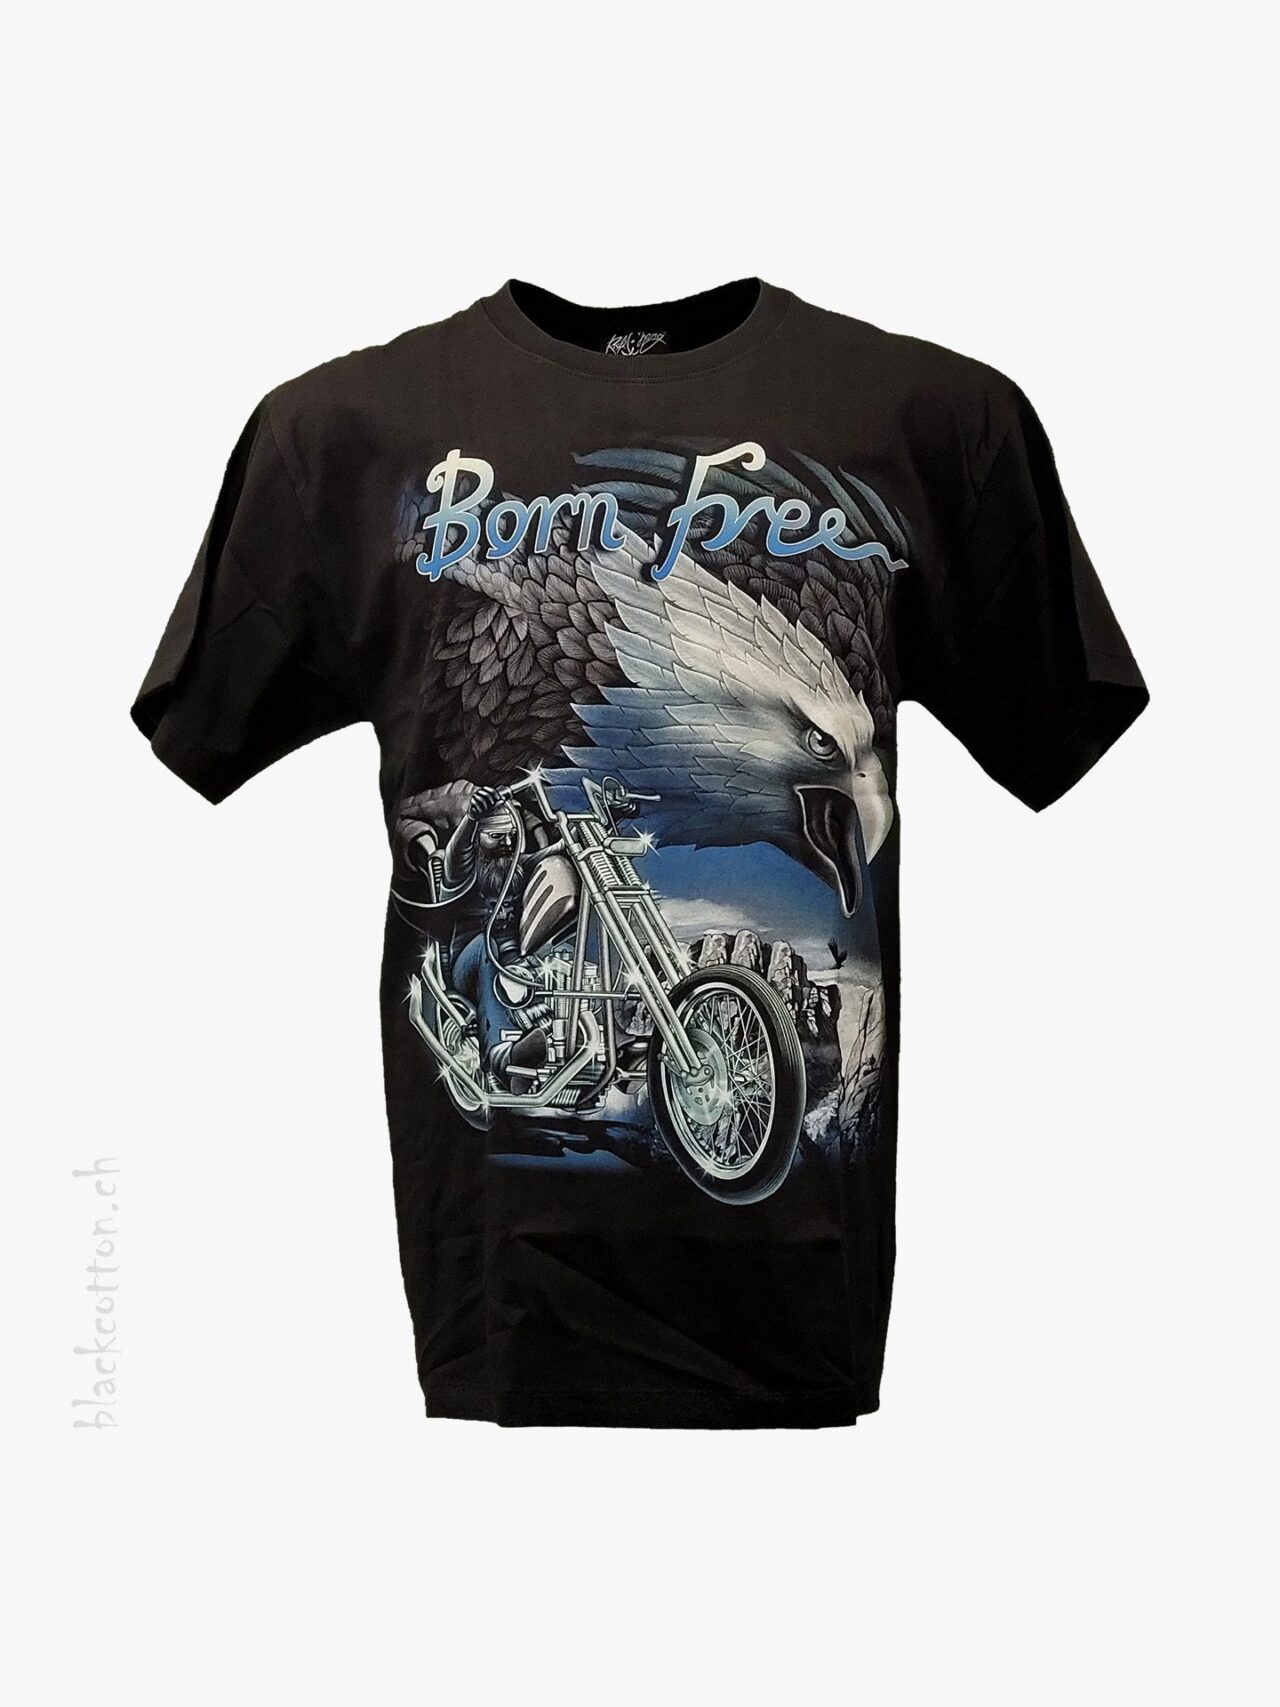 T-Shirt Born Free Adler Biker ROCK CHANG Glow in the Dark